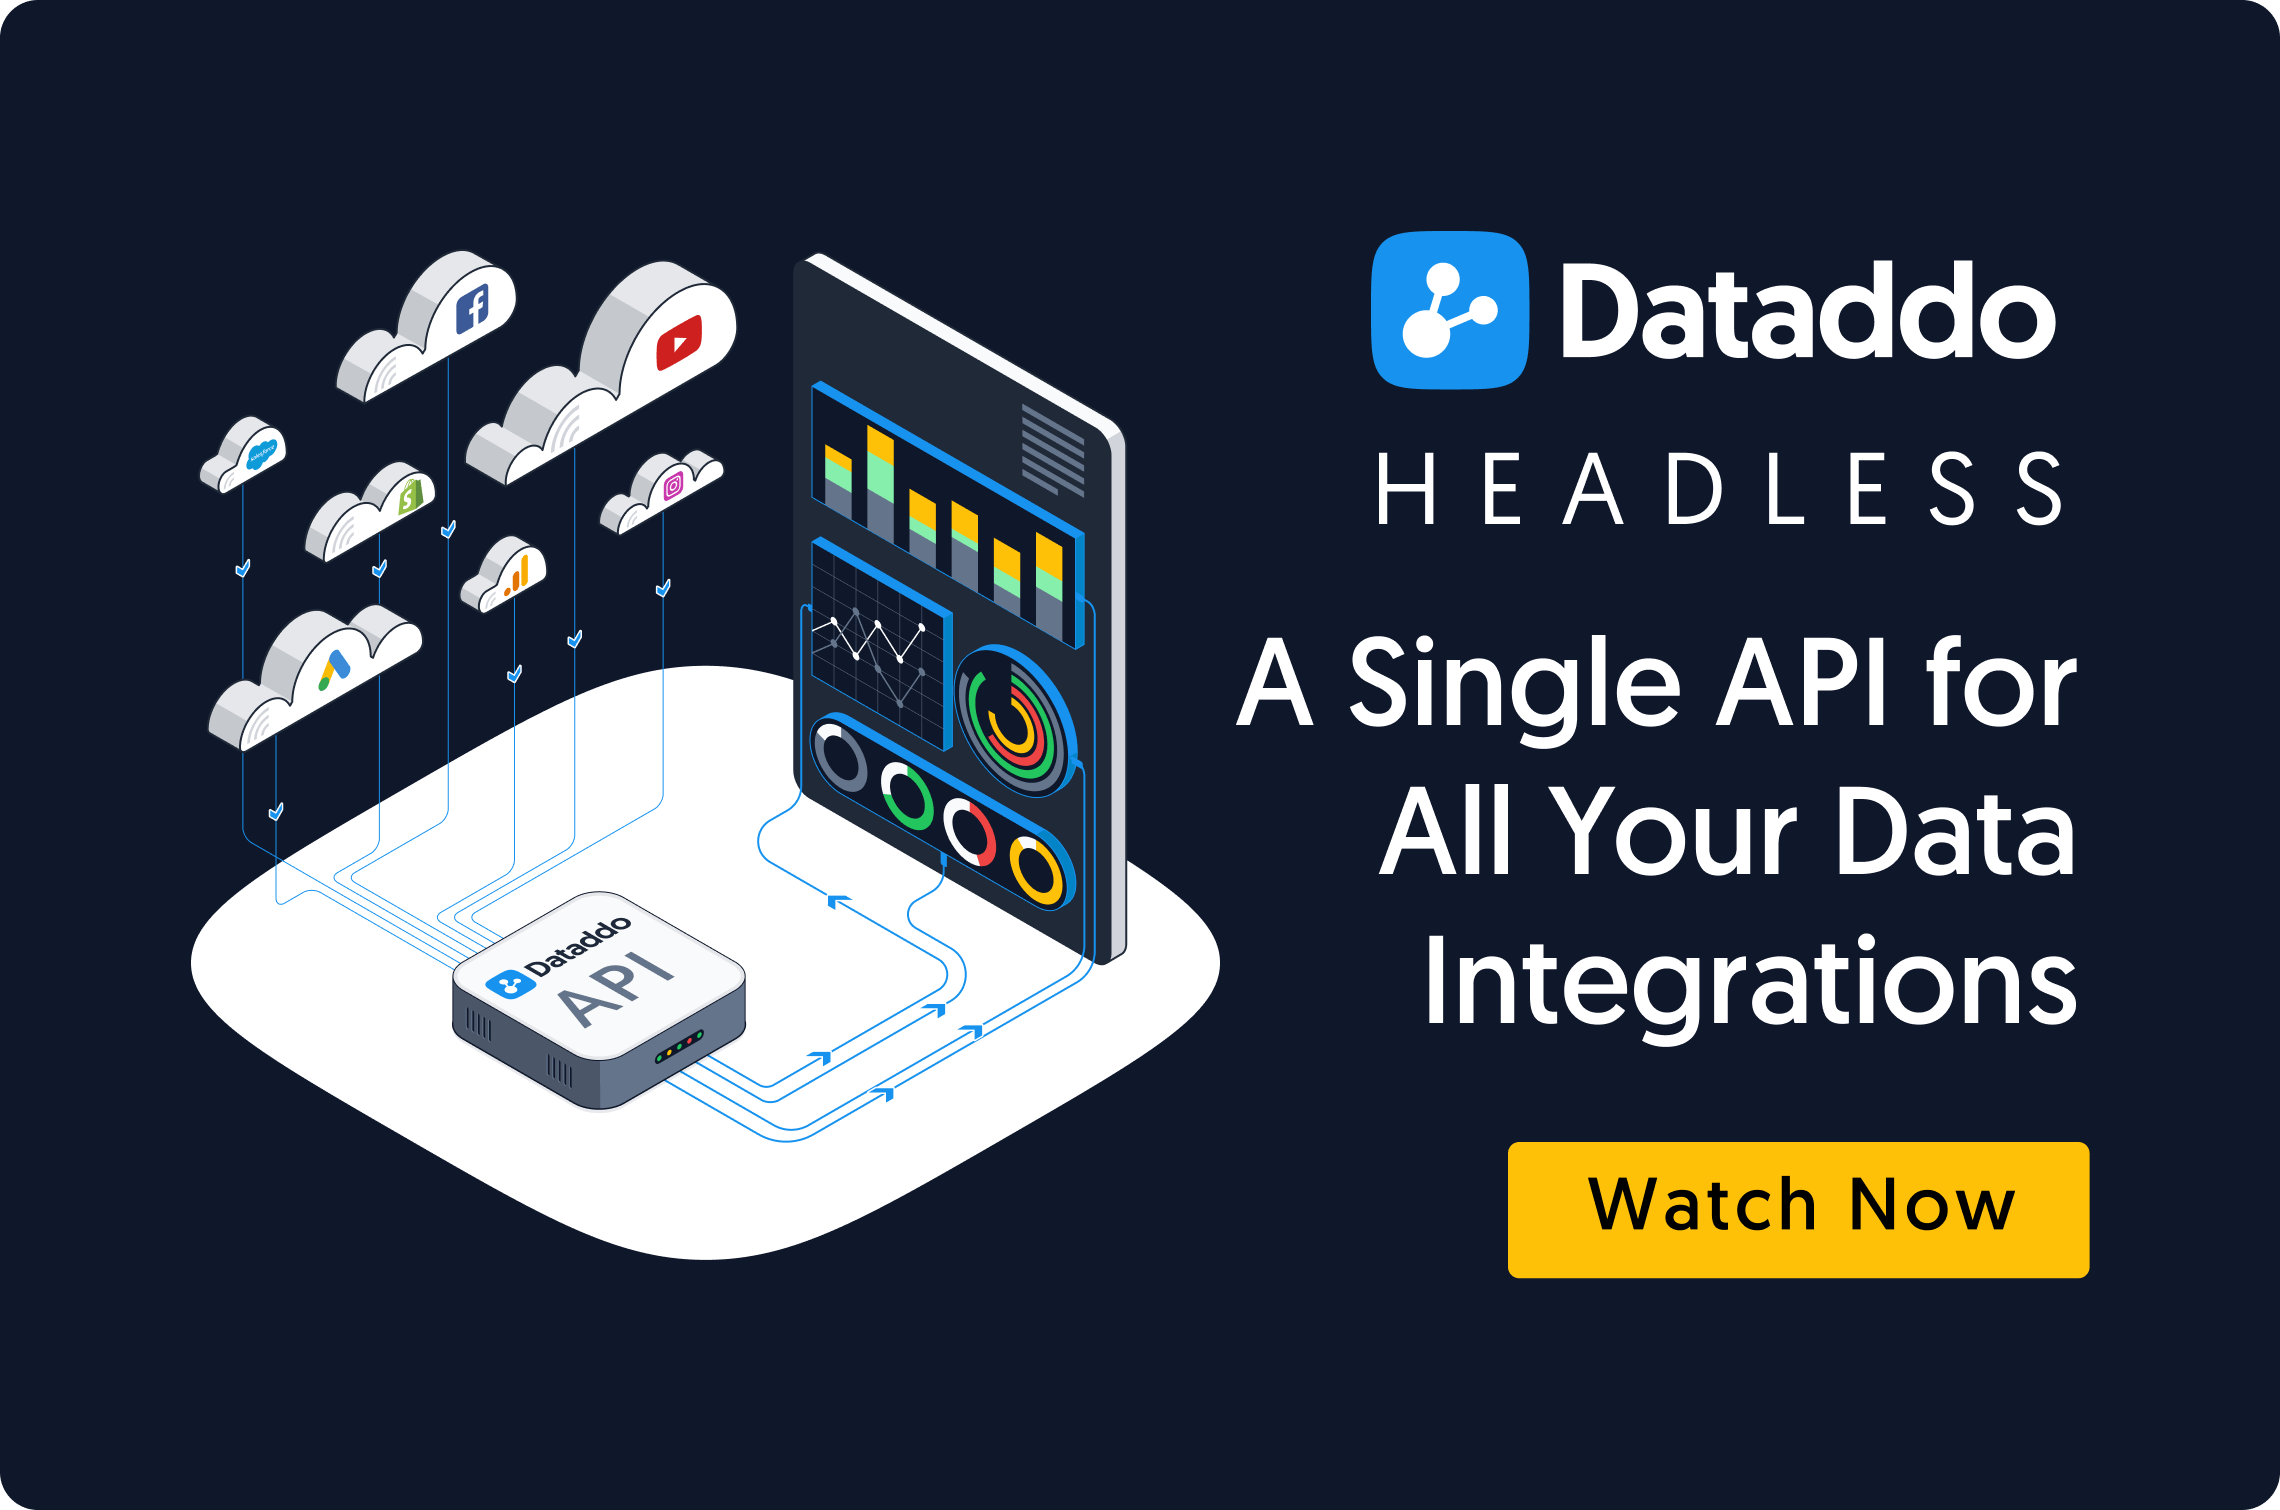 [WEBINAR] Dataddo Headless: A Single API for All Your Data Integrations